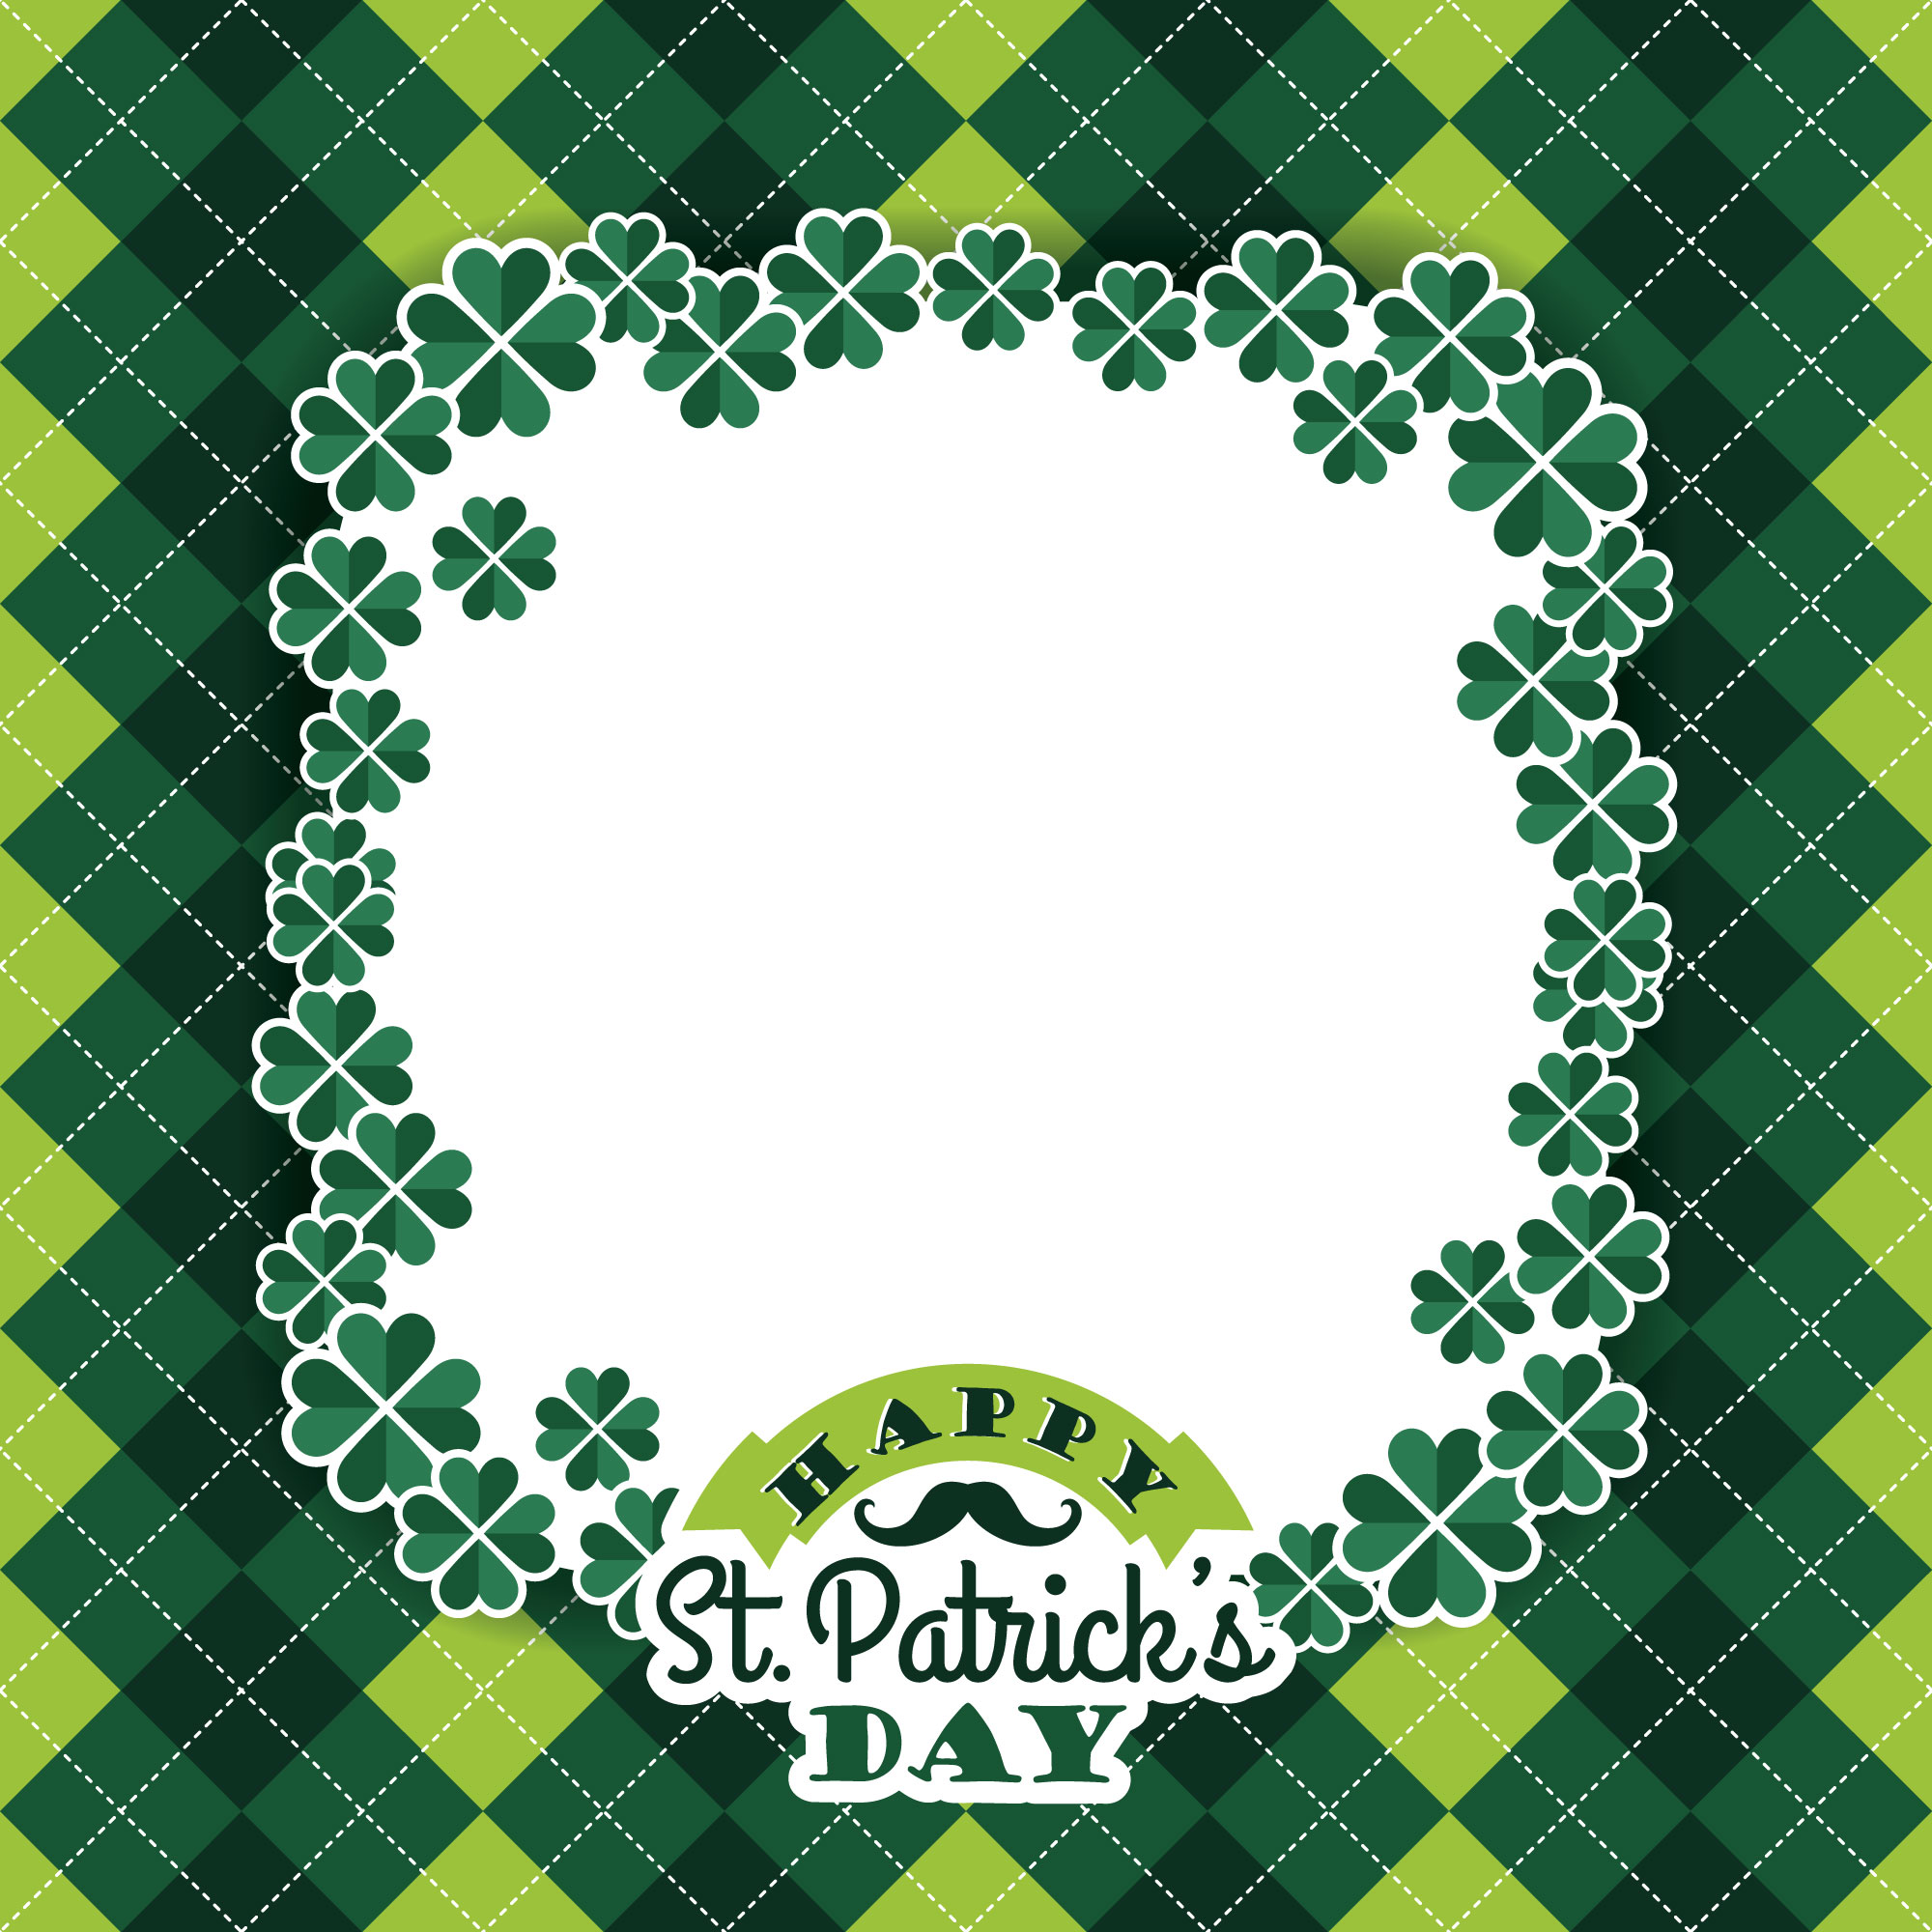 Saint Patricks Day baskground. Vector illustration Photoshop brush